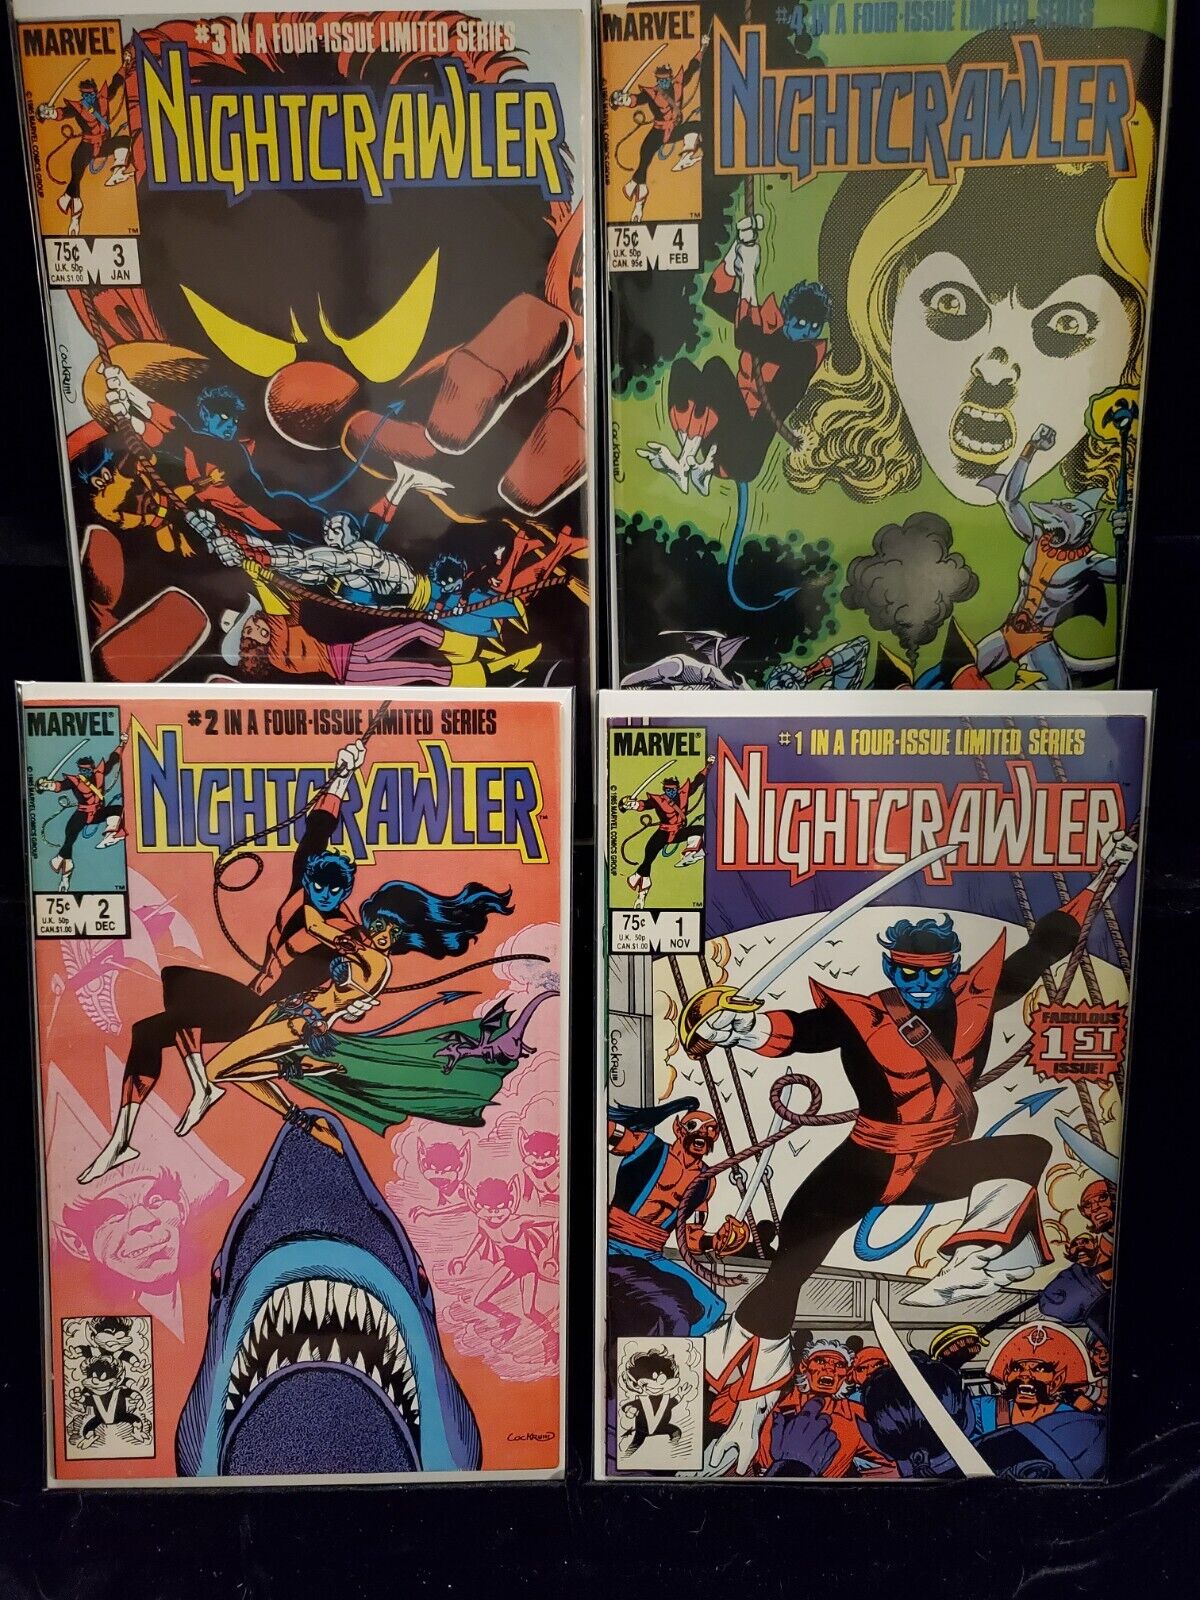 NIGHTCRAWLER #1-4 Complete Set, Marvel Comics (1985) 